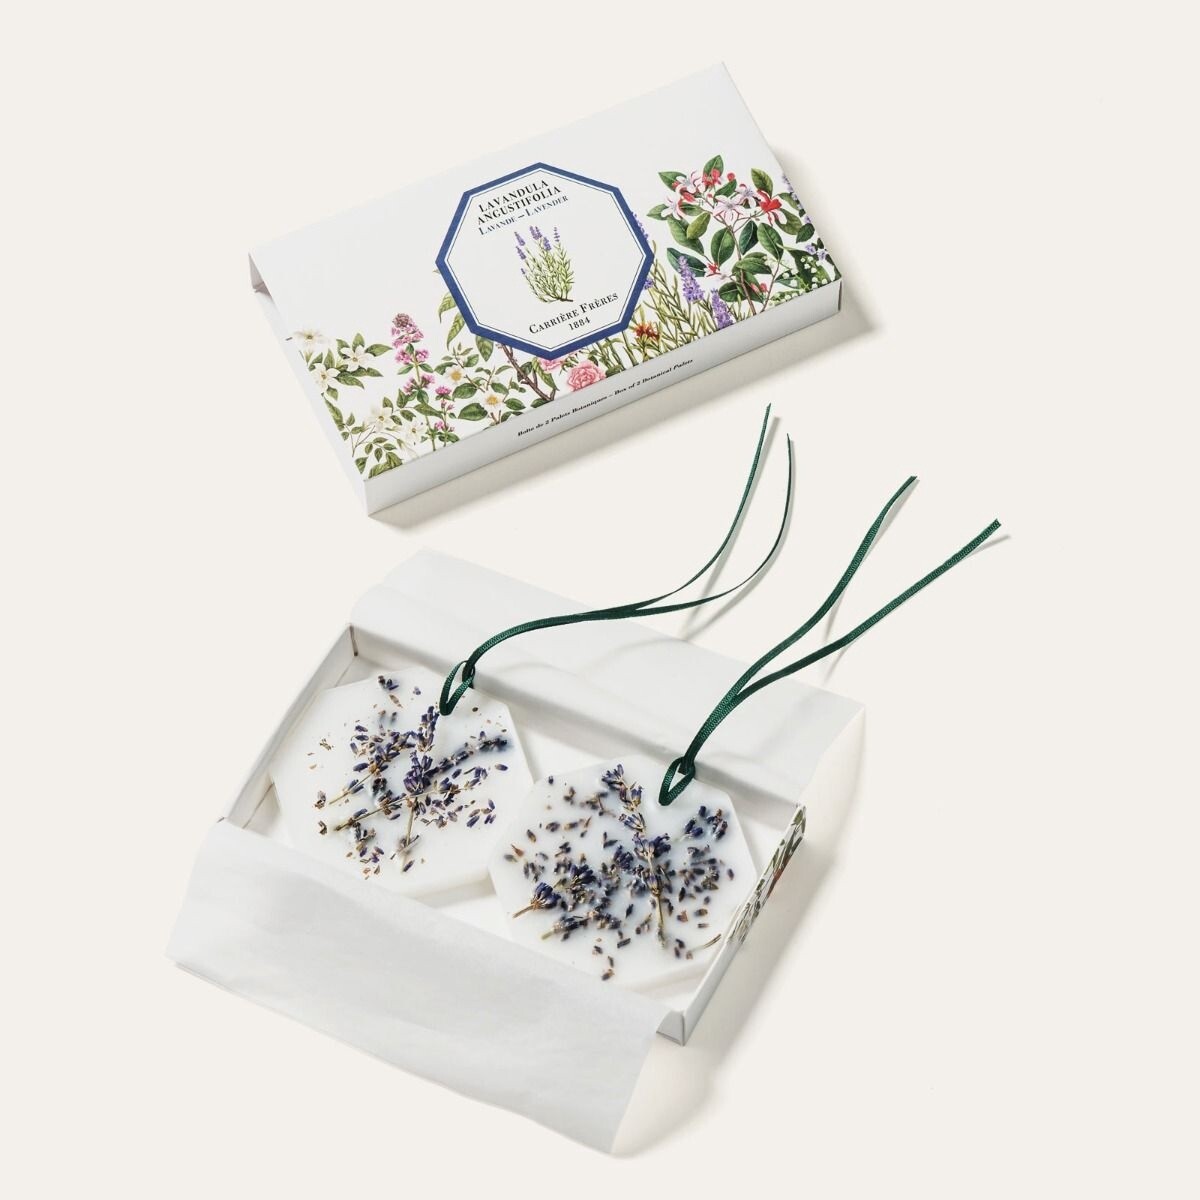 Lavandula Angustifolia - Lavender Botanical Palet